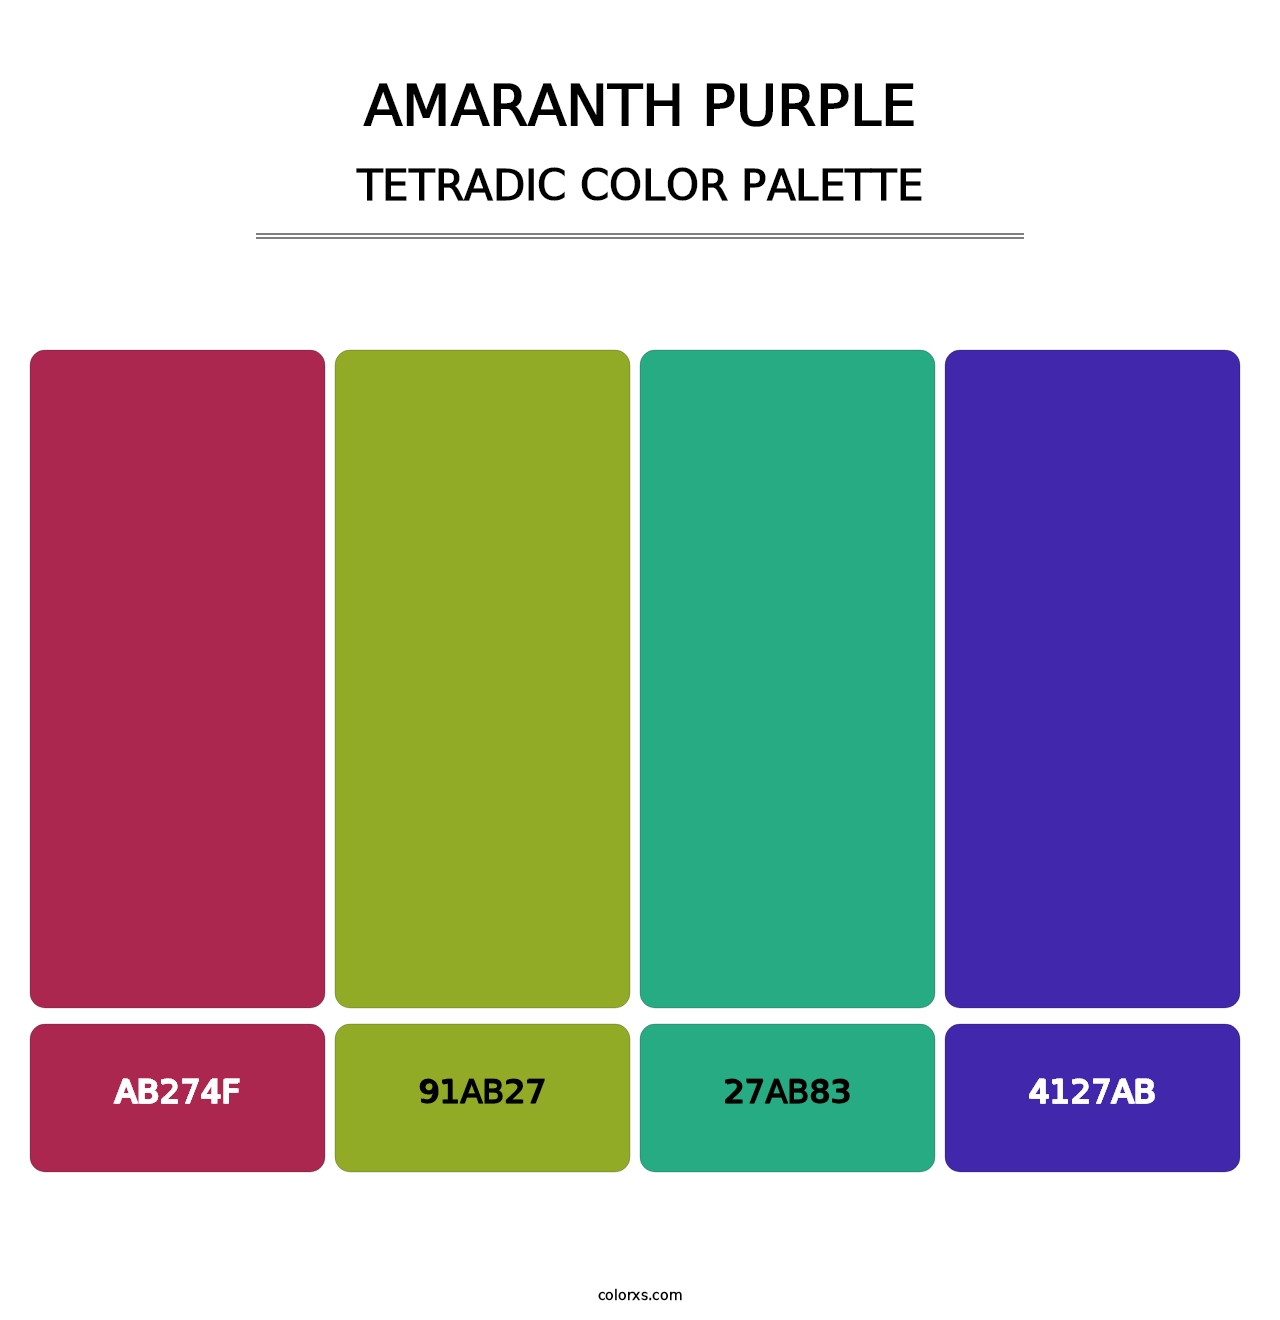 Amaranth Purple - Tetradic Color Palette